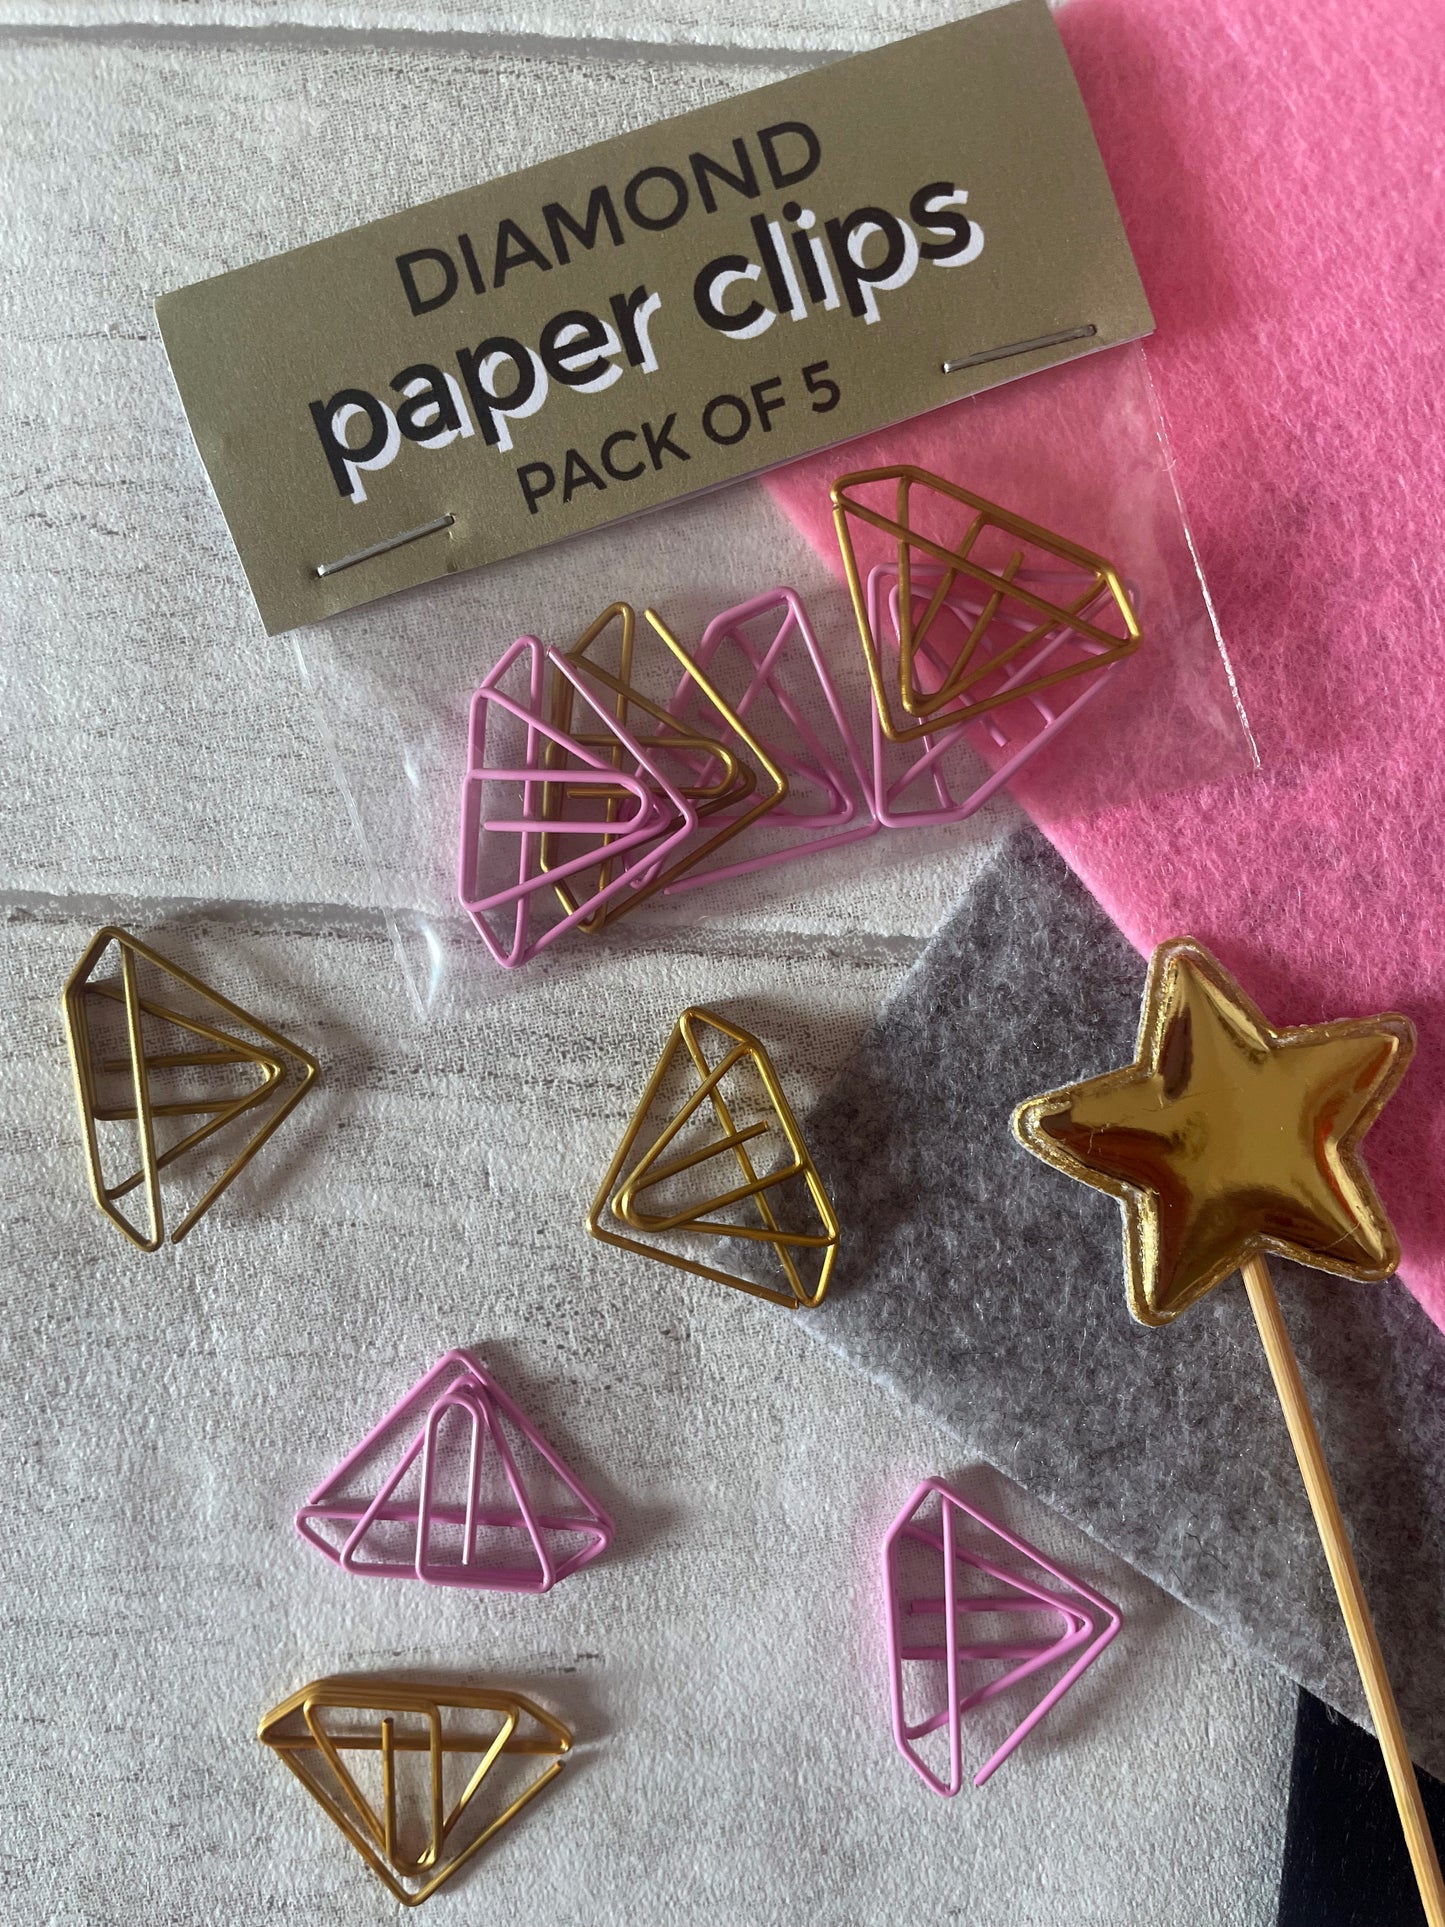 Diamond Paper Clips